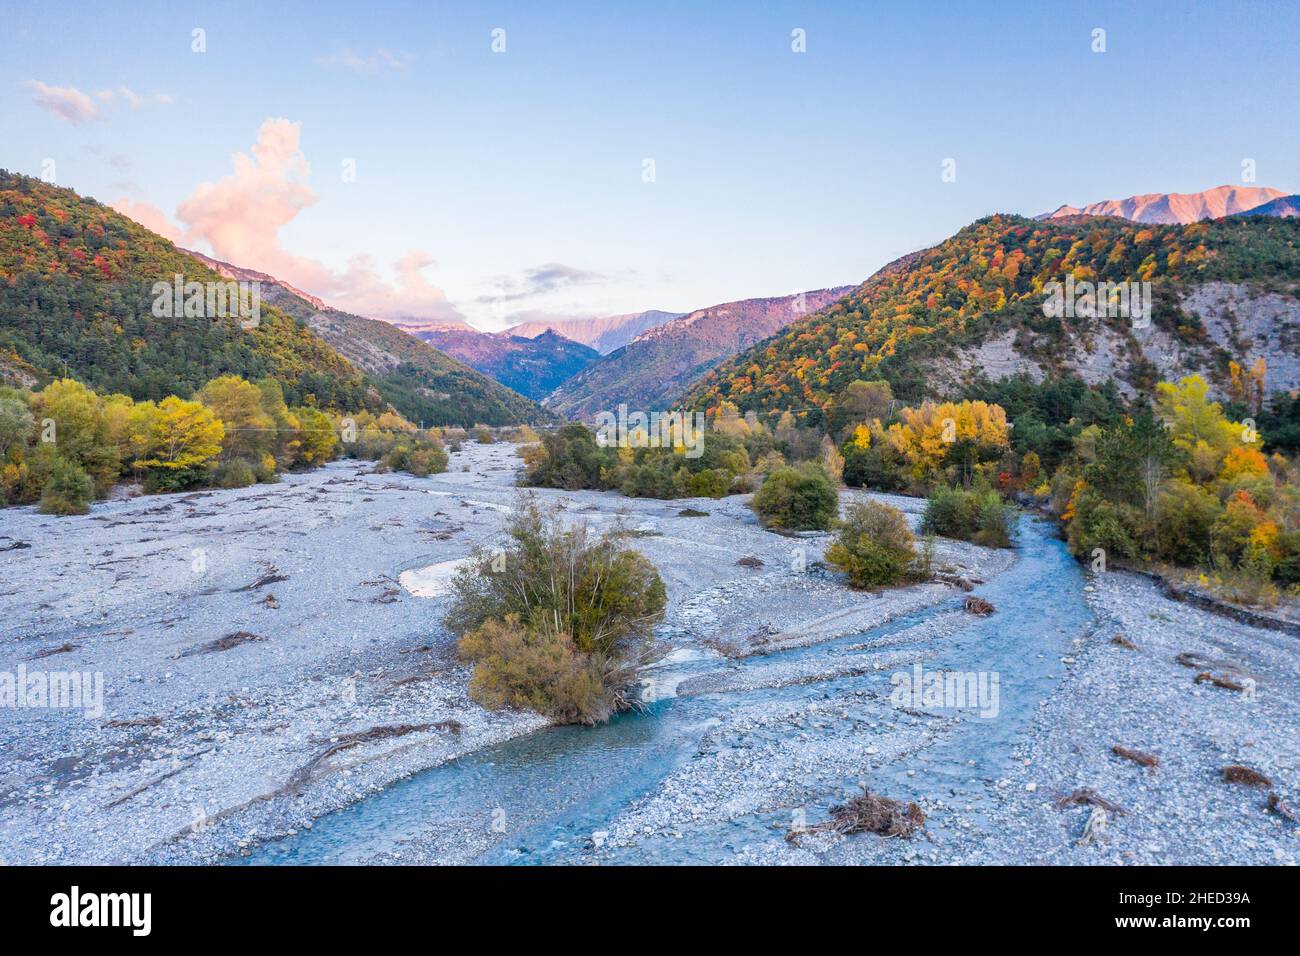 Francia, Alpes de Haute Provence, Reserva natural geologique de Haute Provence, La Javie, alto valle de Foto de stock